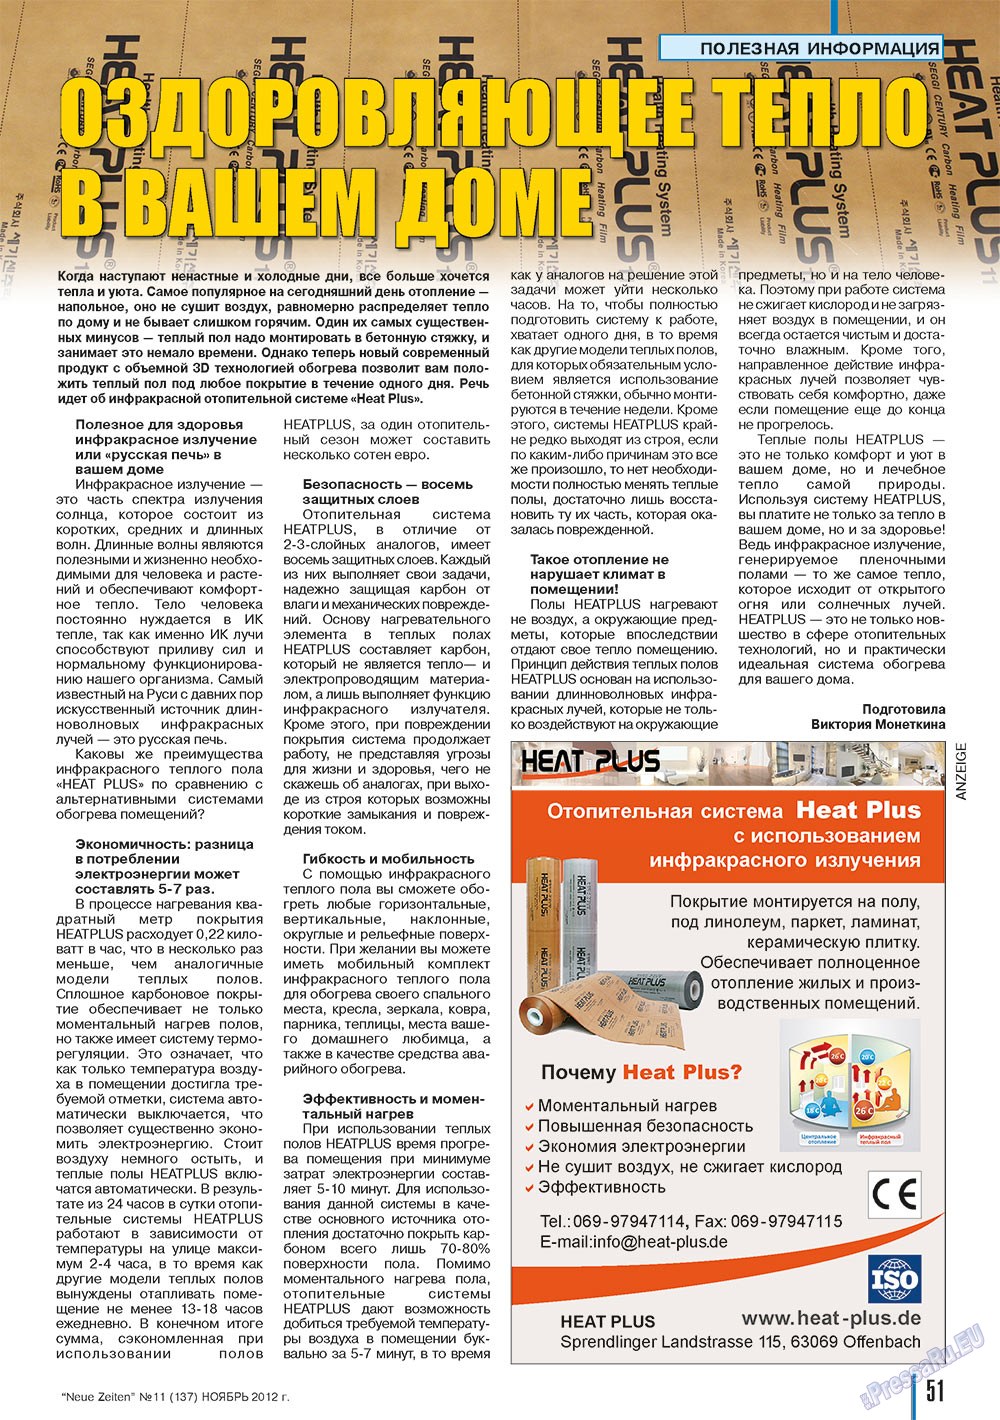 Neue Zeiten (журнал). 2012 год, номер 11, стр. 51